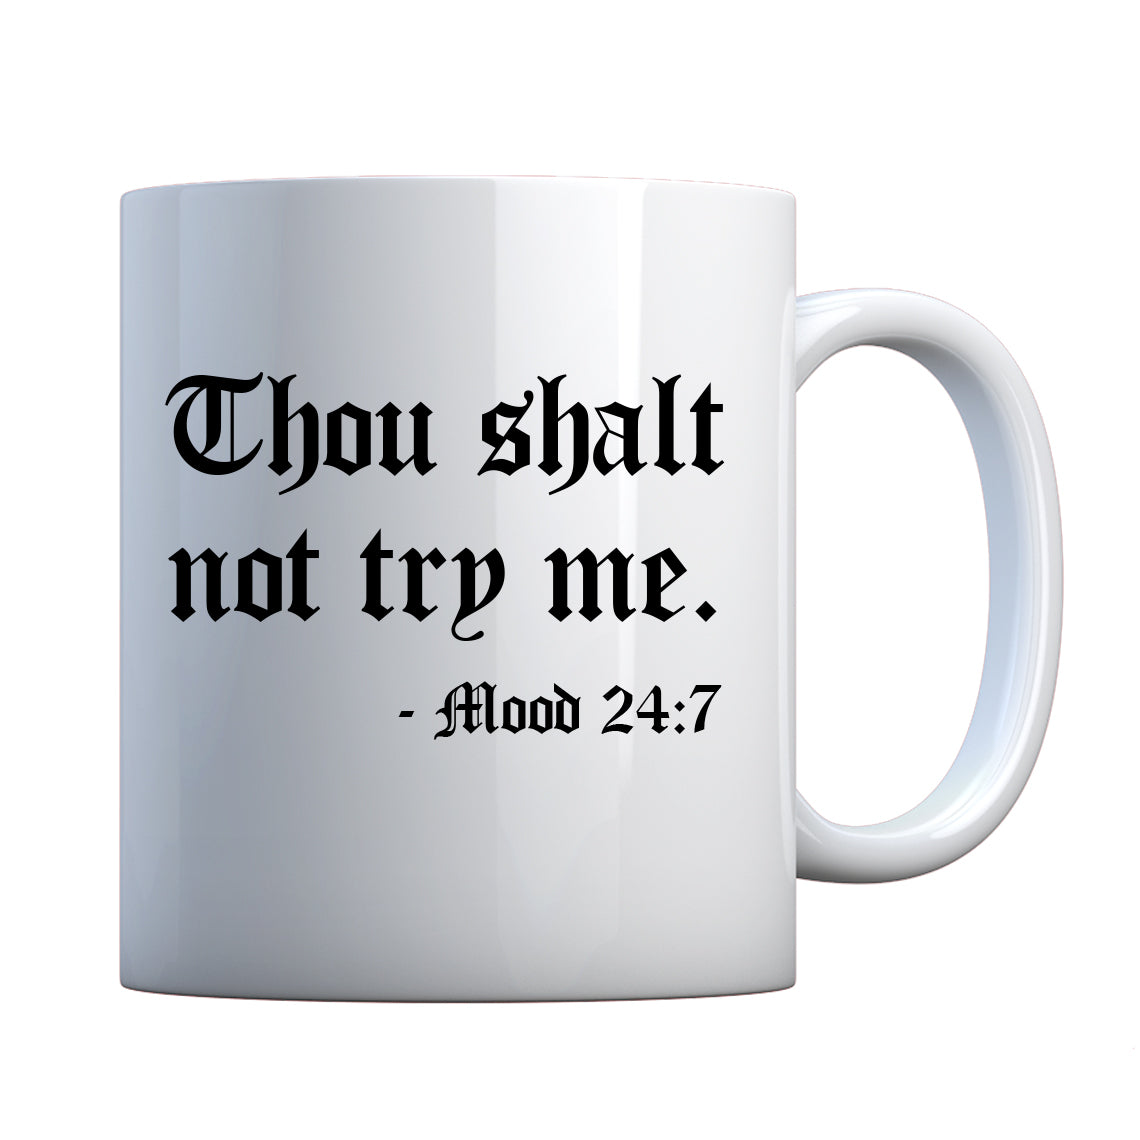 Thou shalt not try me. Ceramic Gift Mug